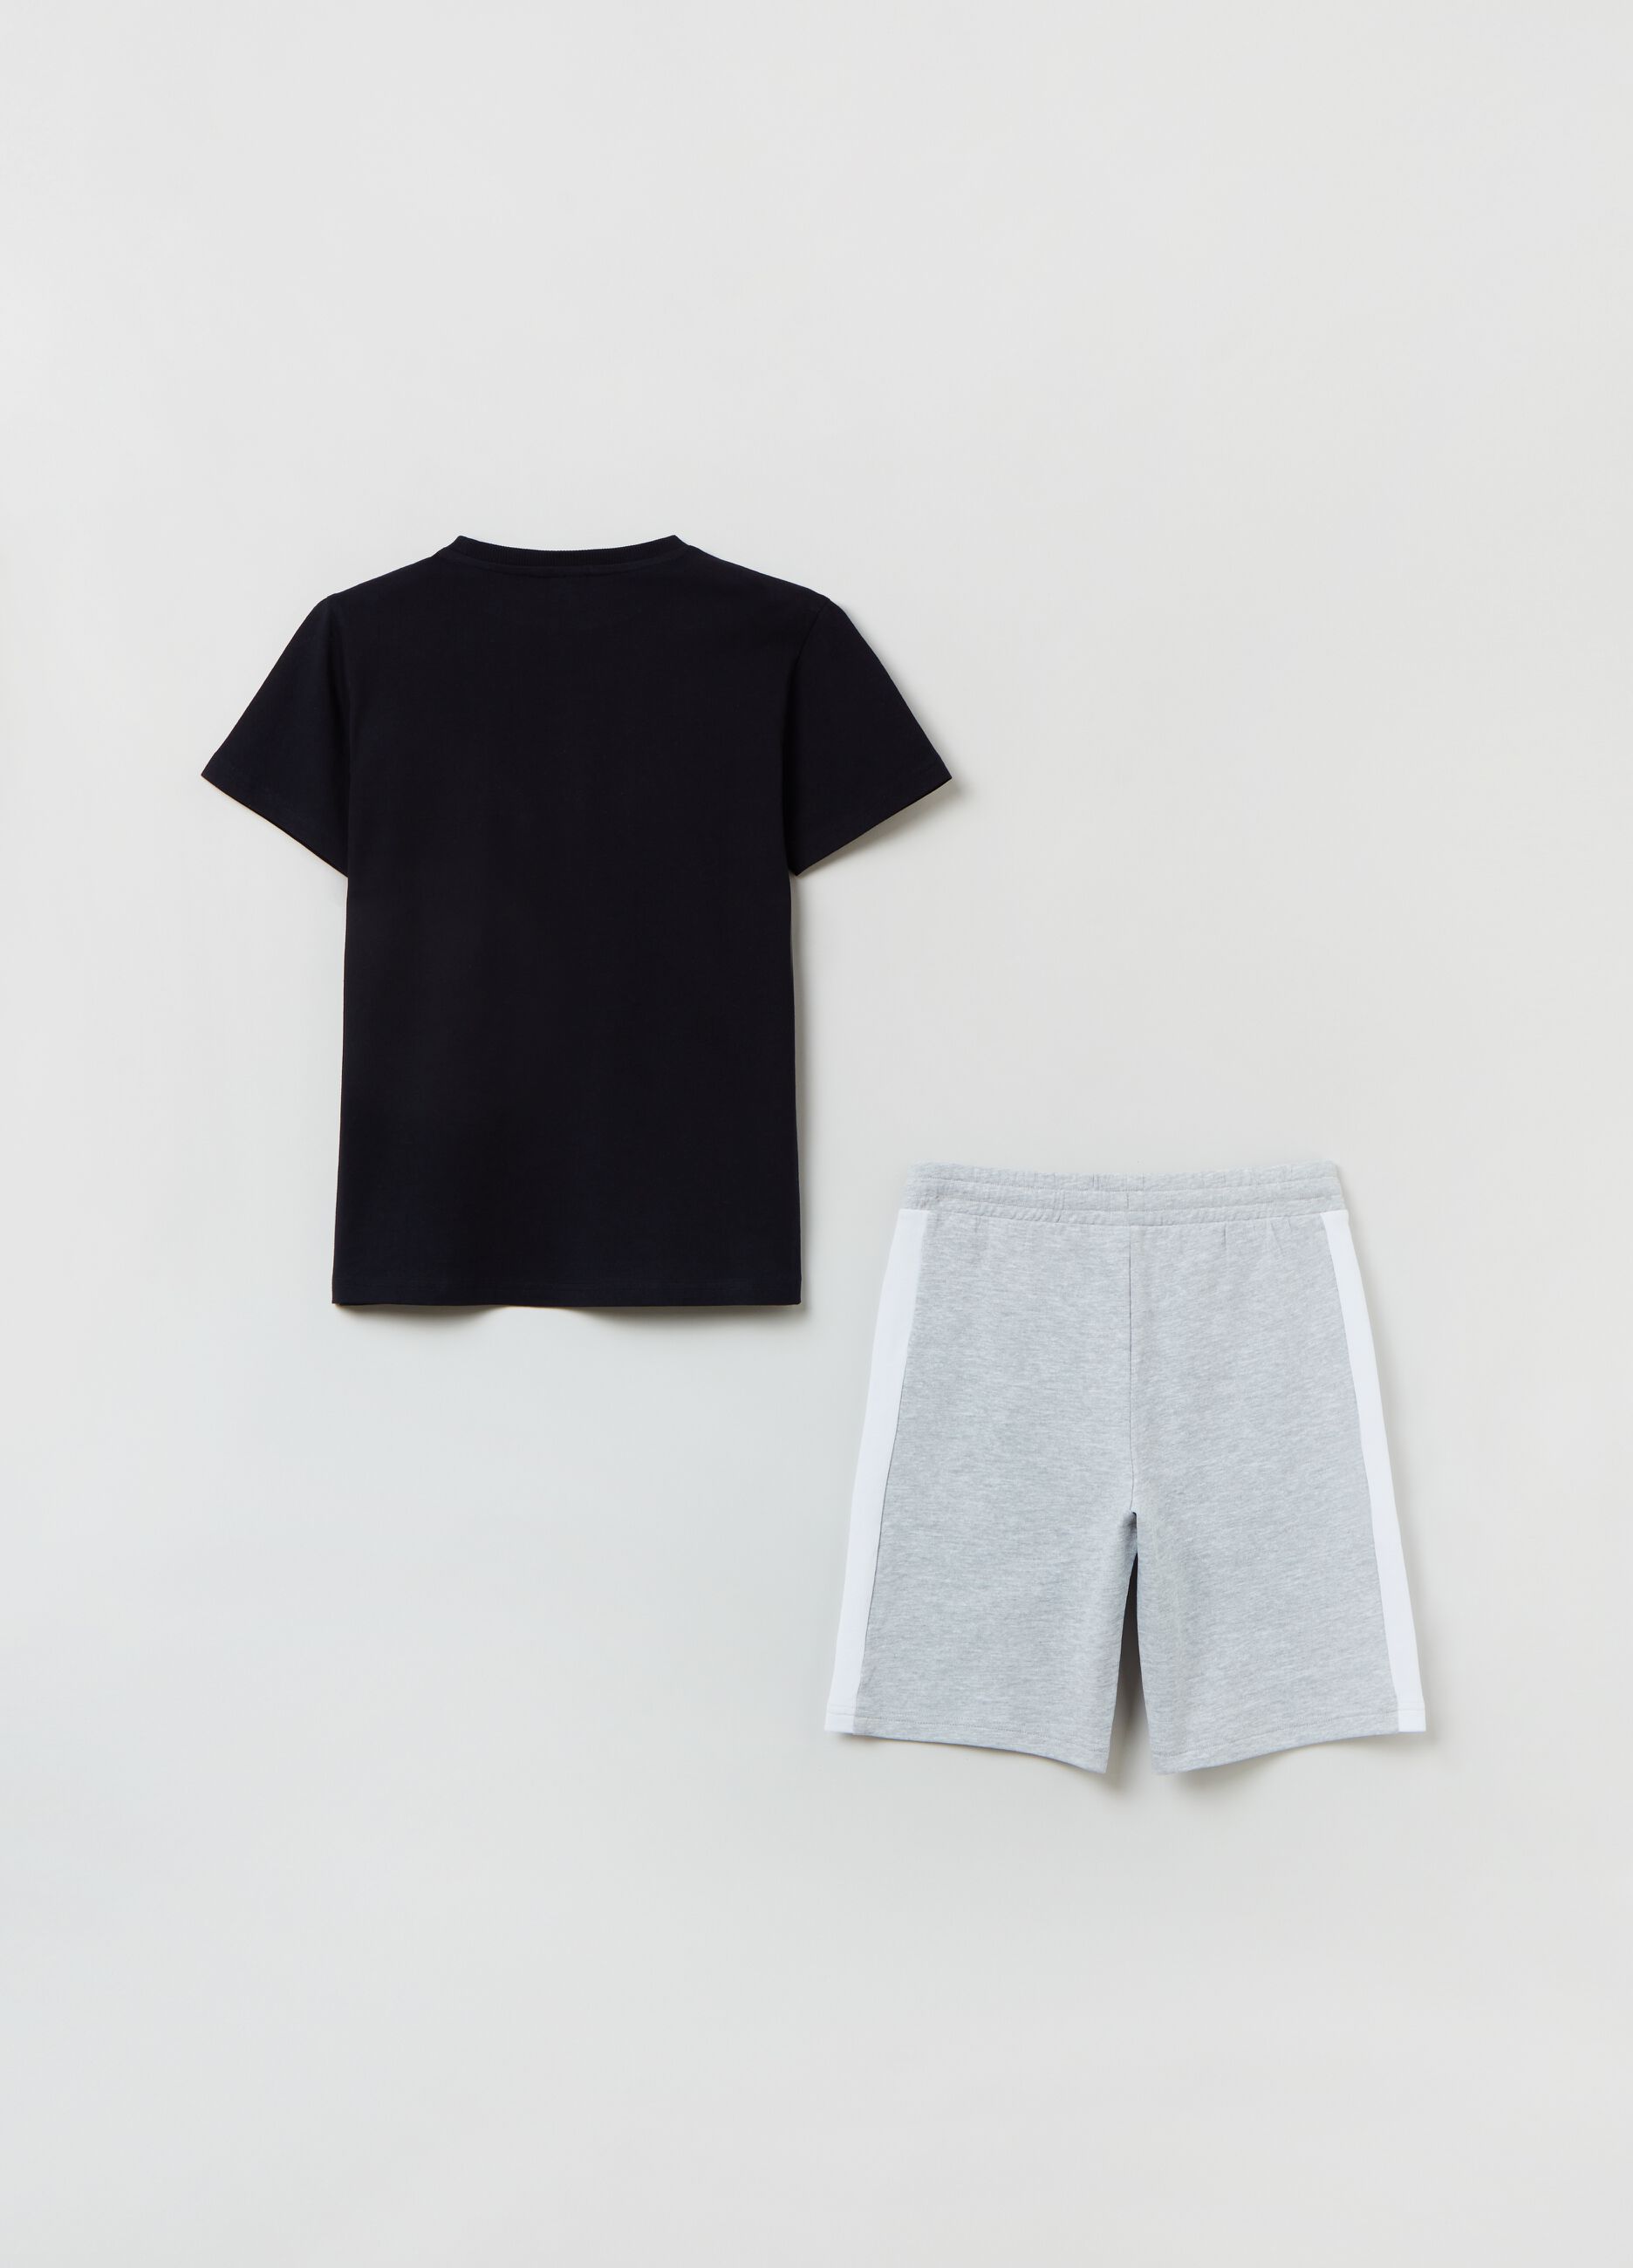 Everlast T-shirt and shorts jogging set